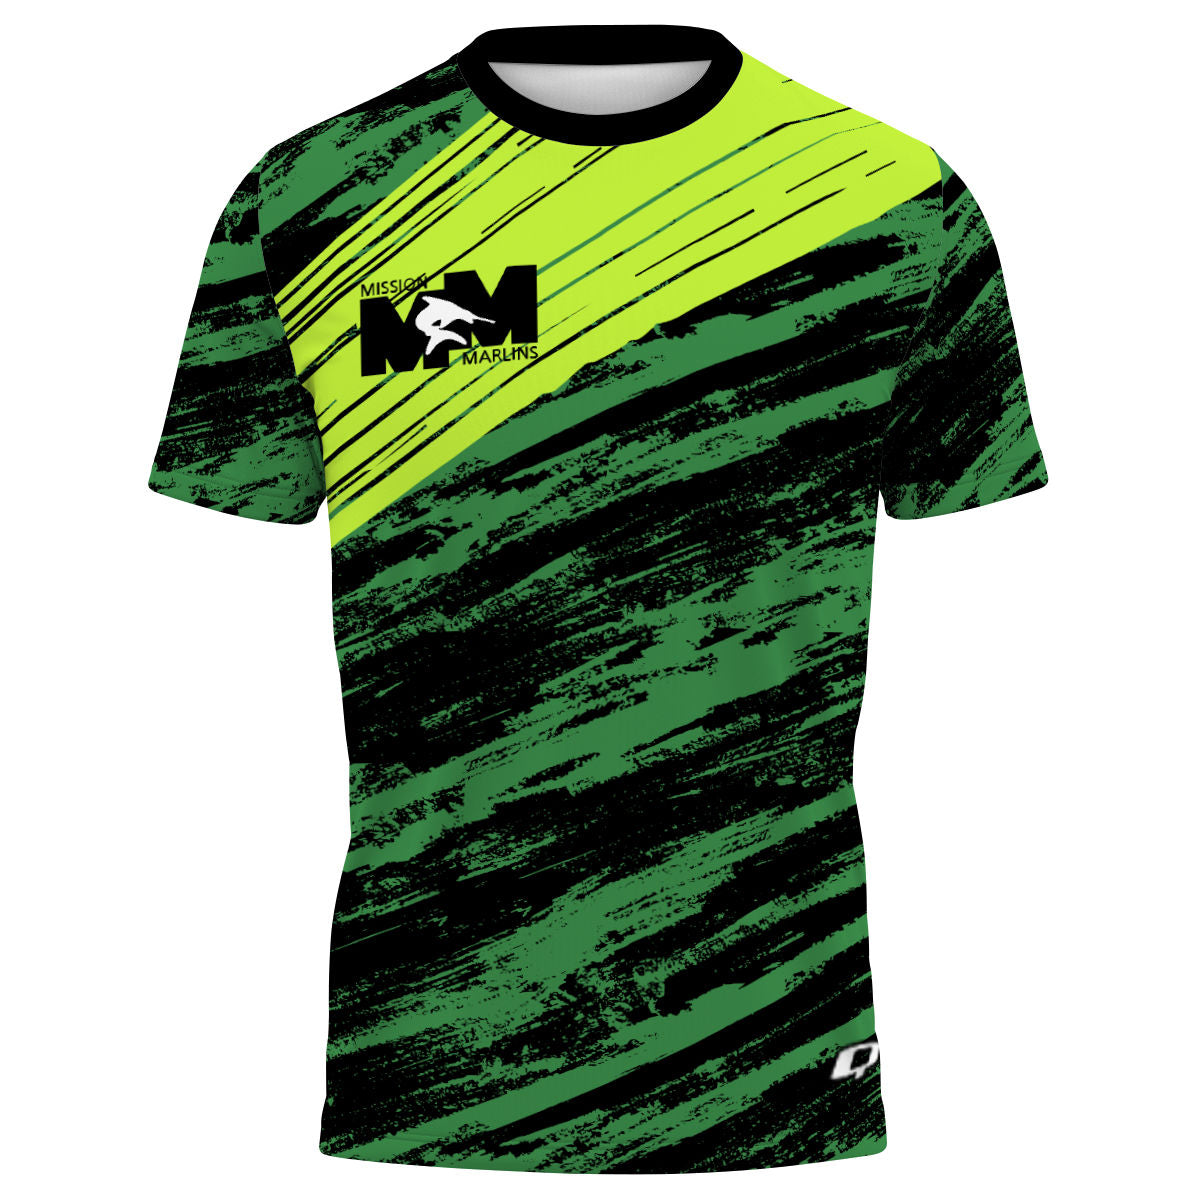 Mission Marlins FV - Performance Shirt – Q Team Store